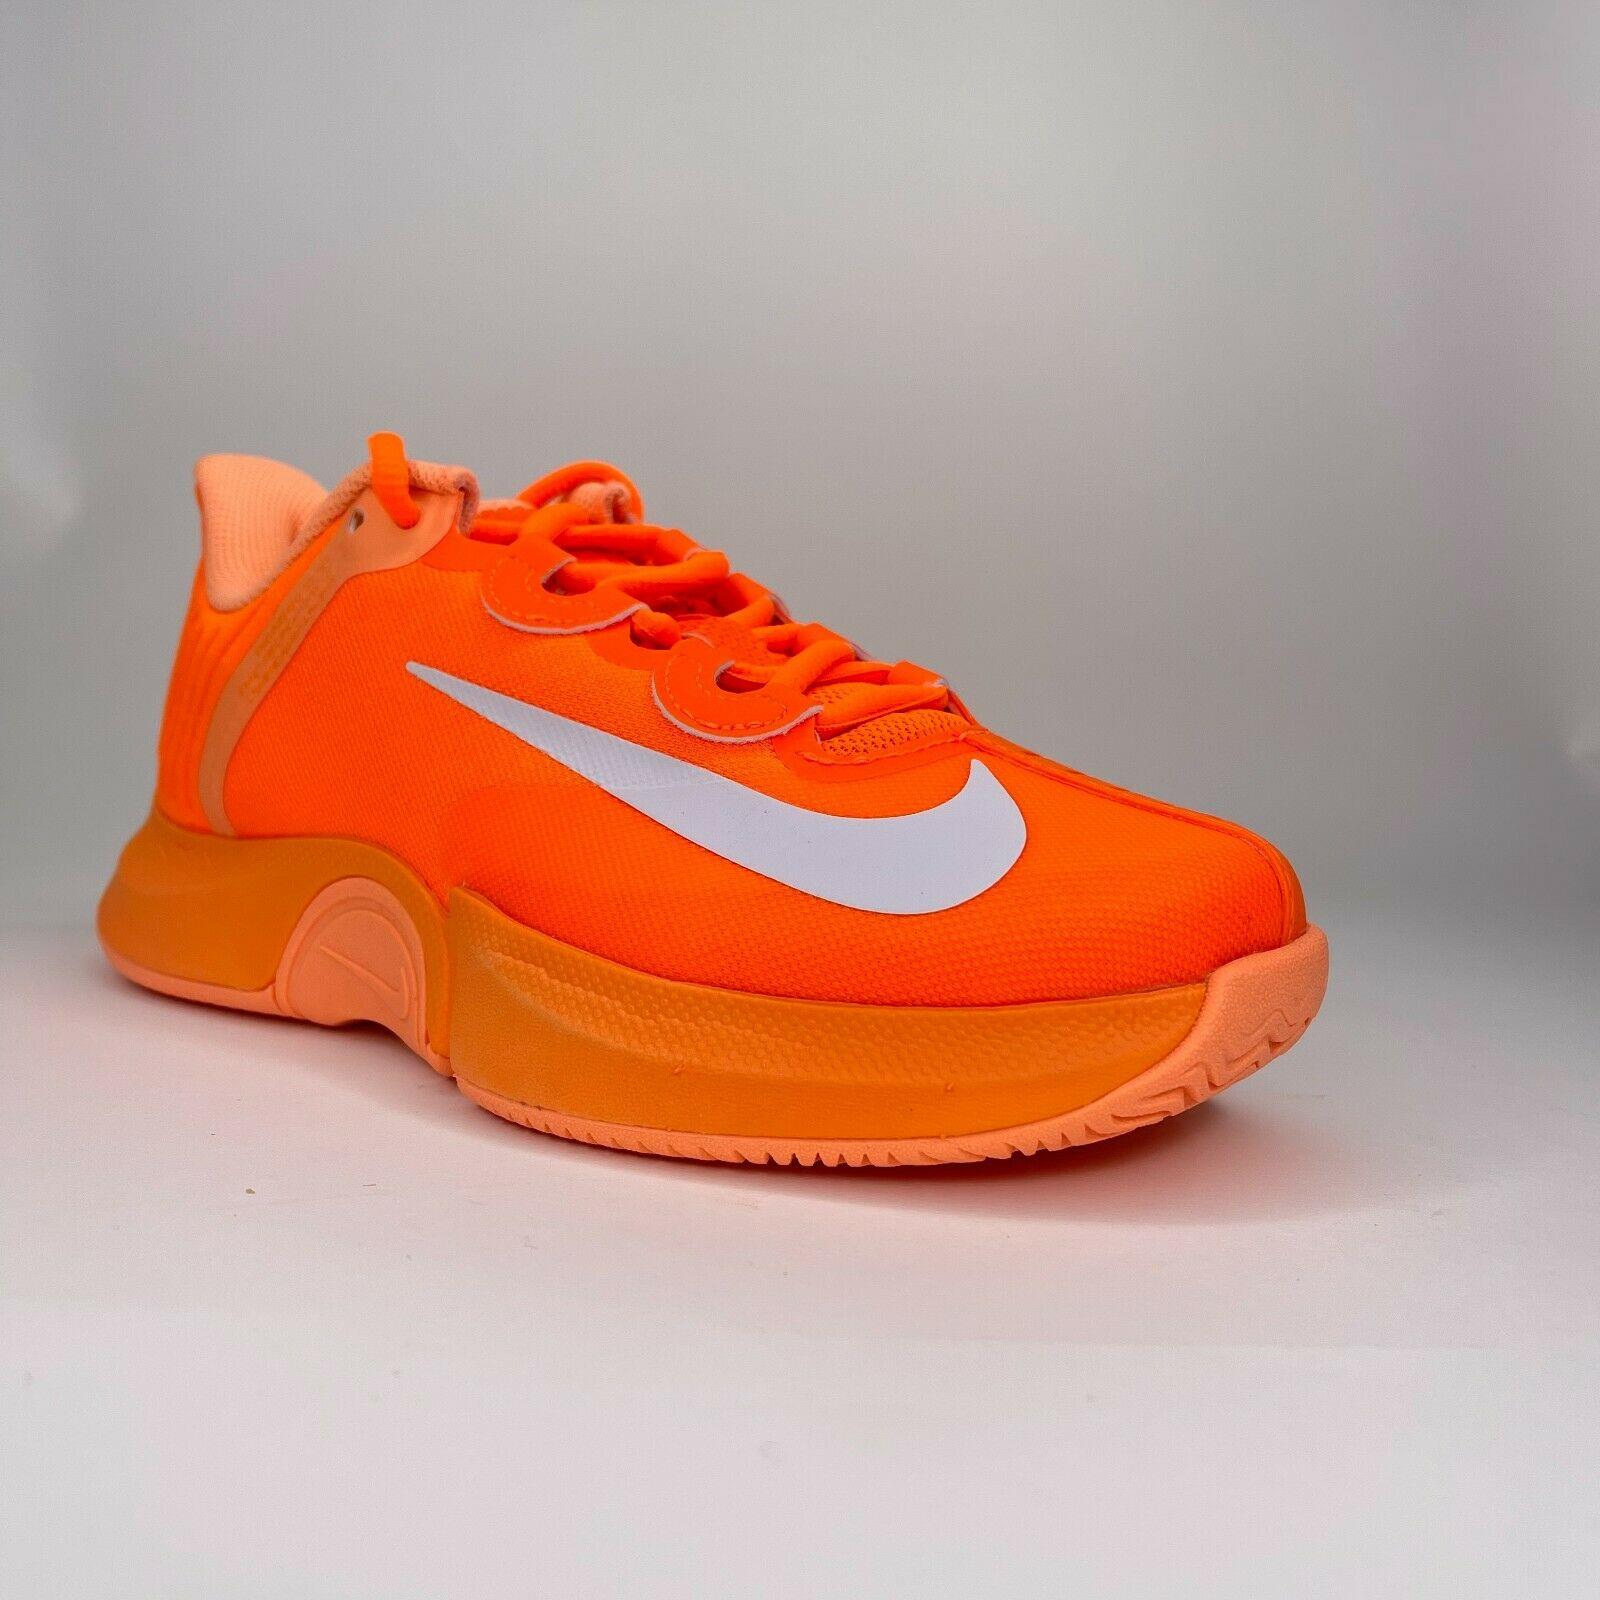 women's nike orange tennis shoes